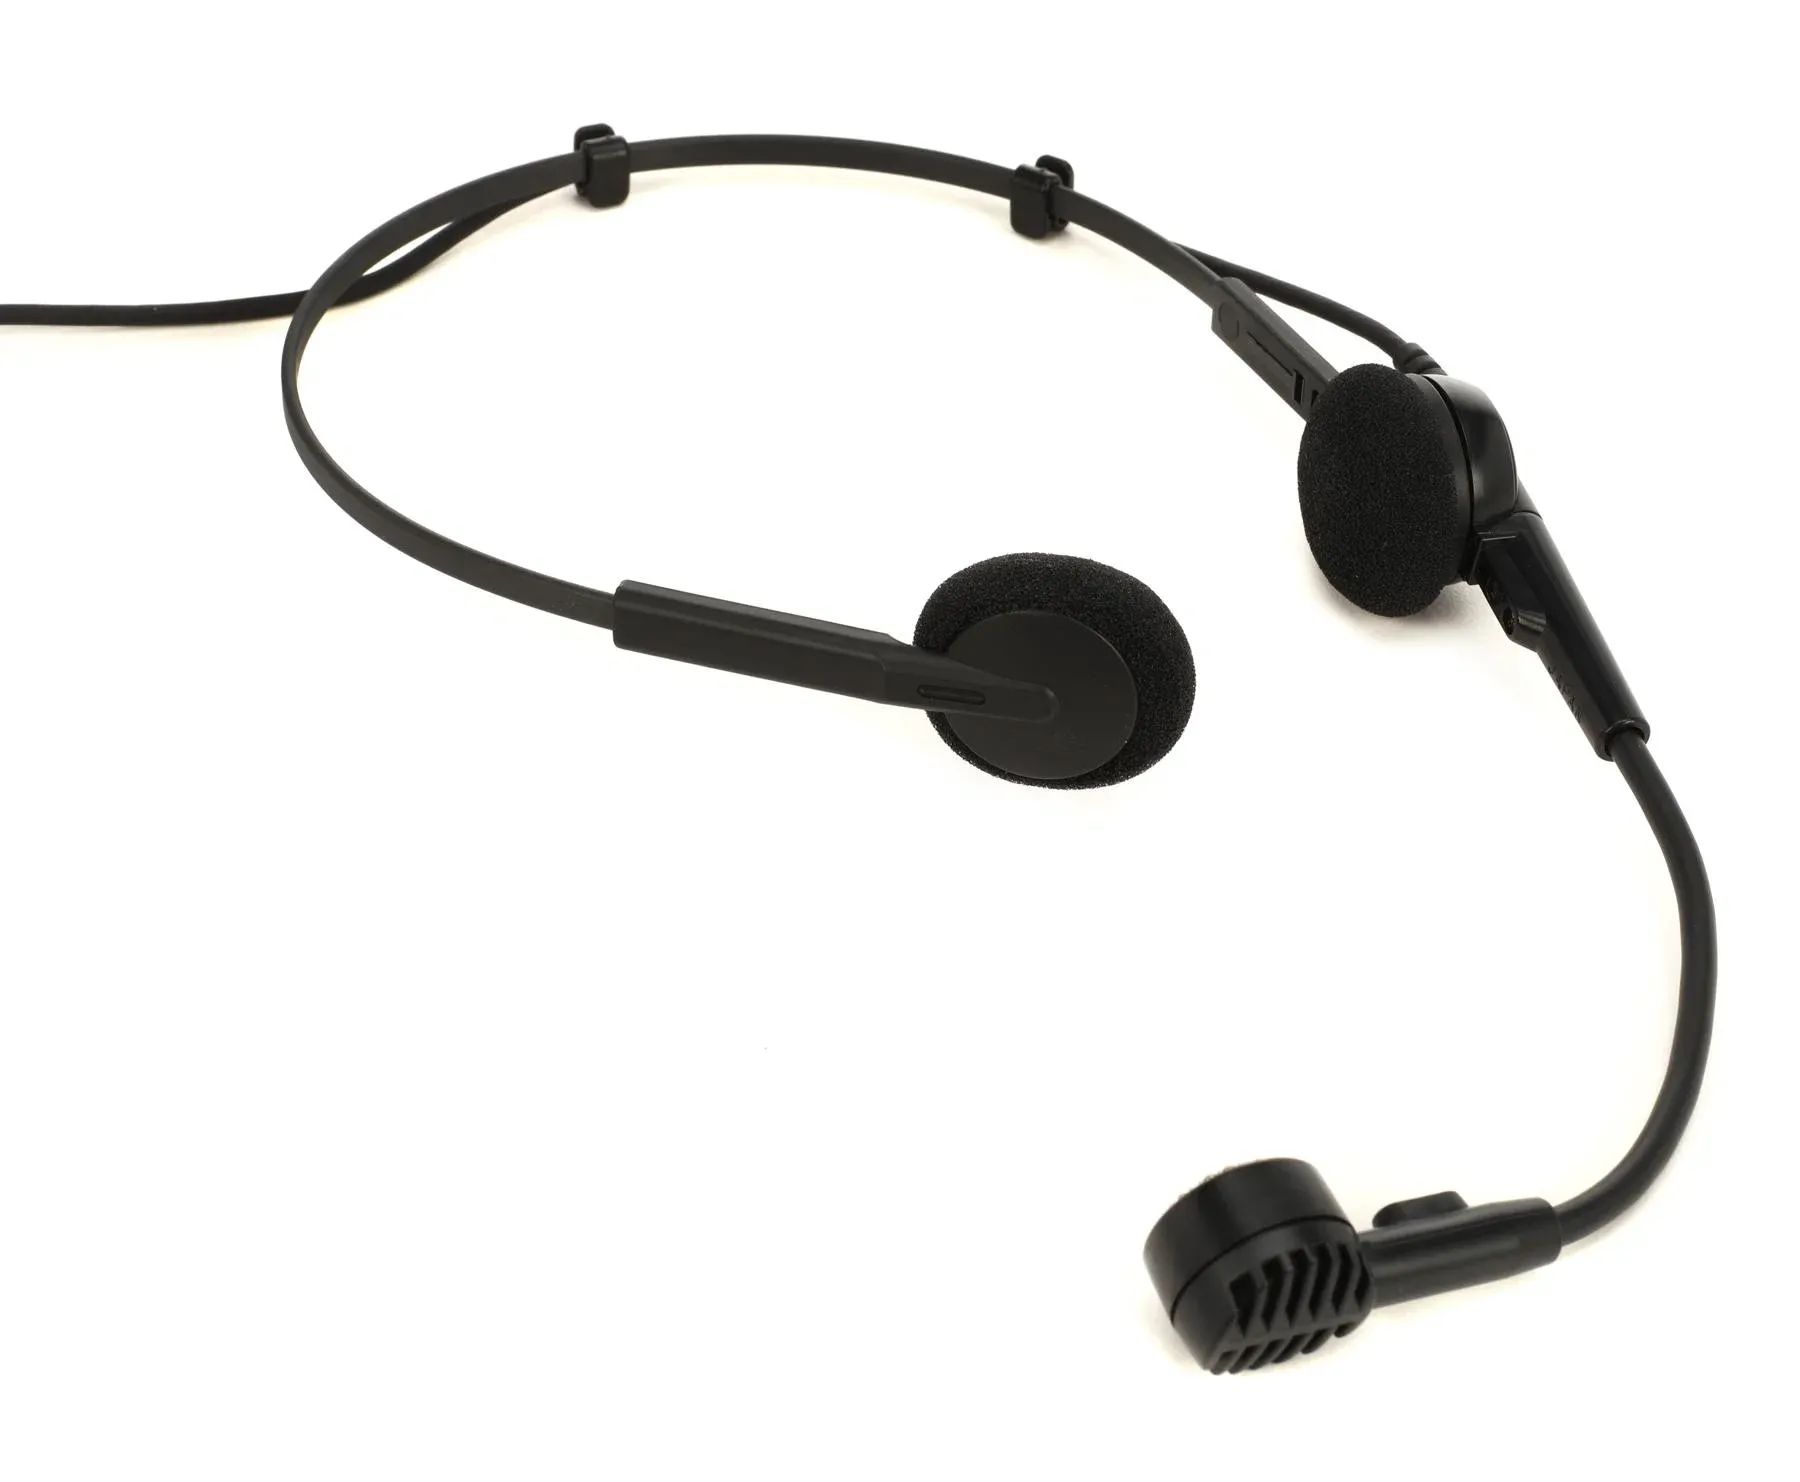 Audio-Technica pro8hex. Микрофон Headset 31. “Headset Microphone” (Halaman 22). Хедсет микрофон. Headset микрофон